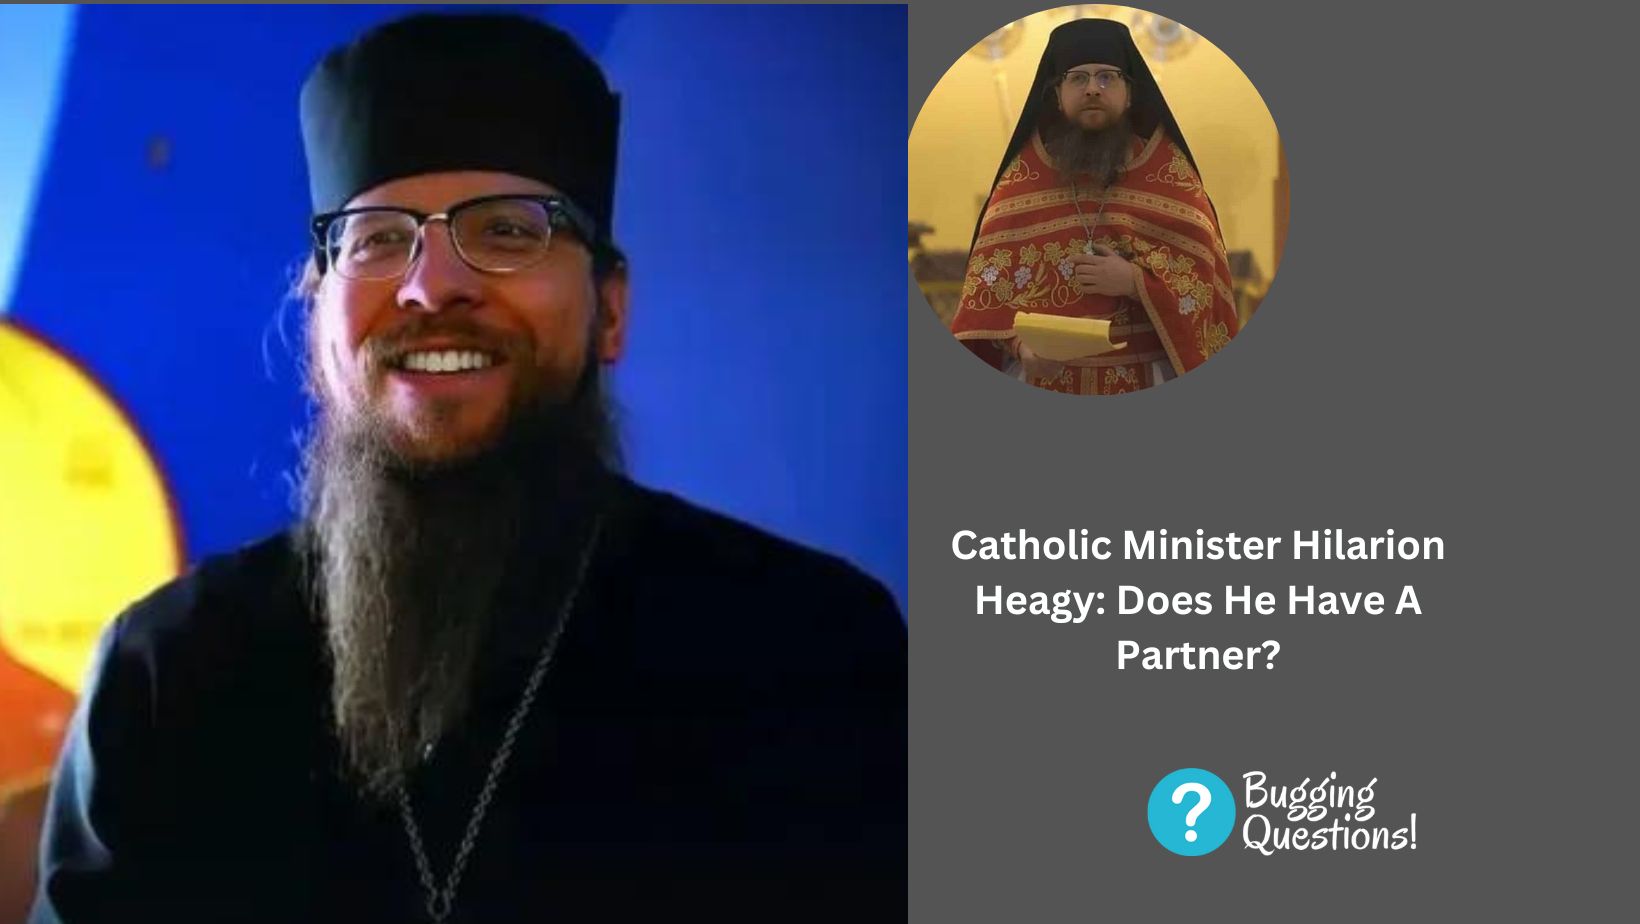 Catholic Minister Hilarion Heagy: Does He Have A Partner?